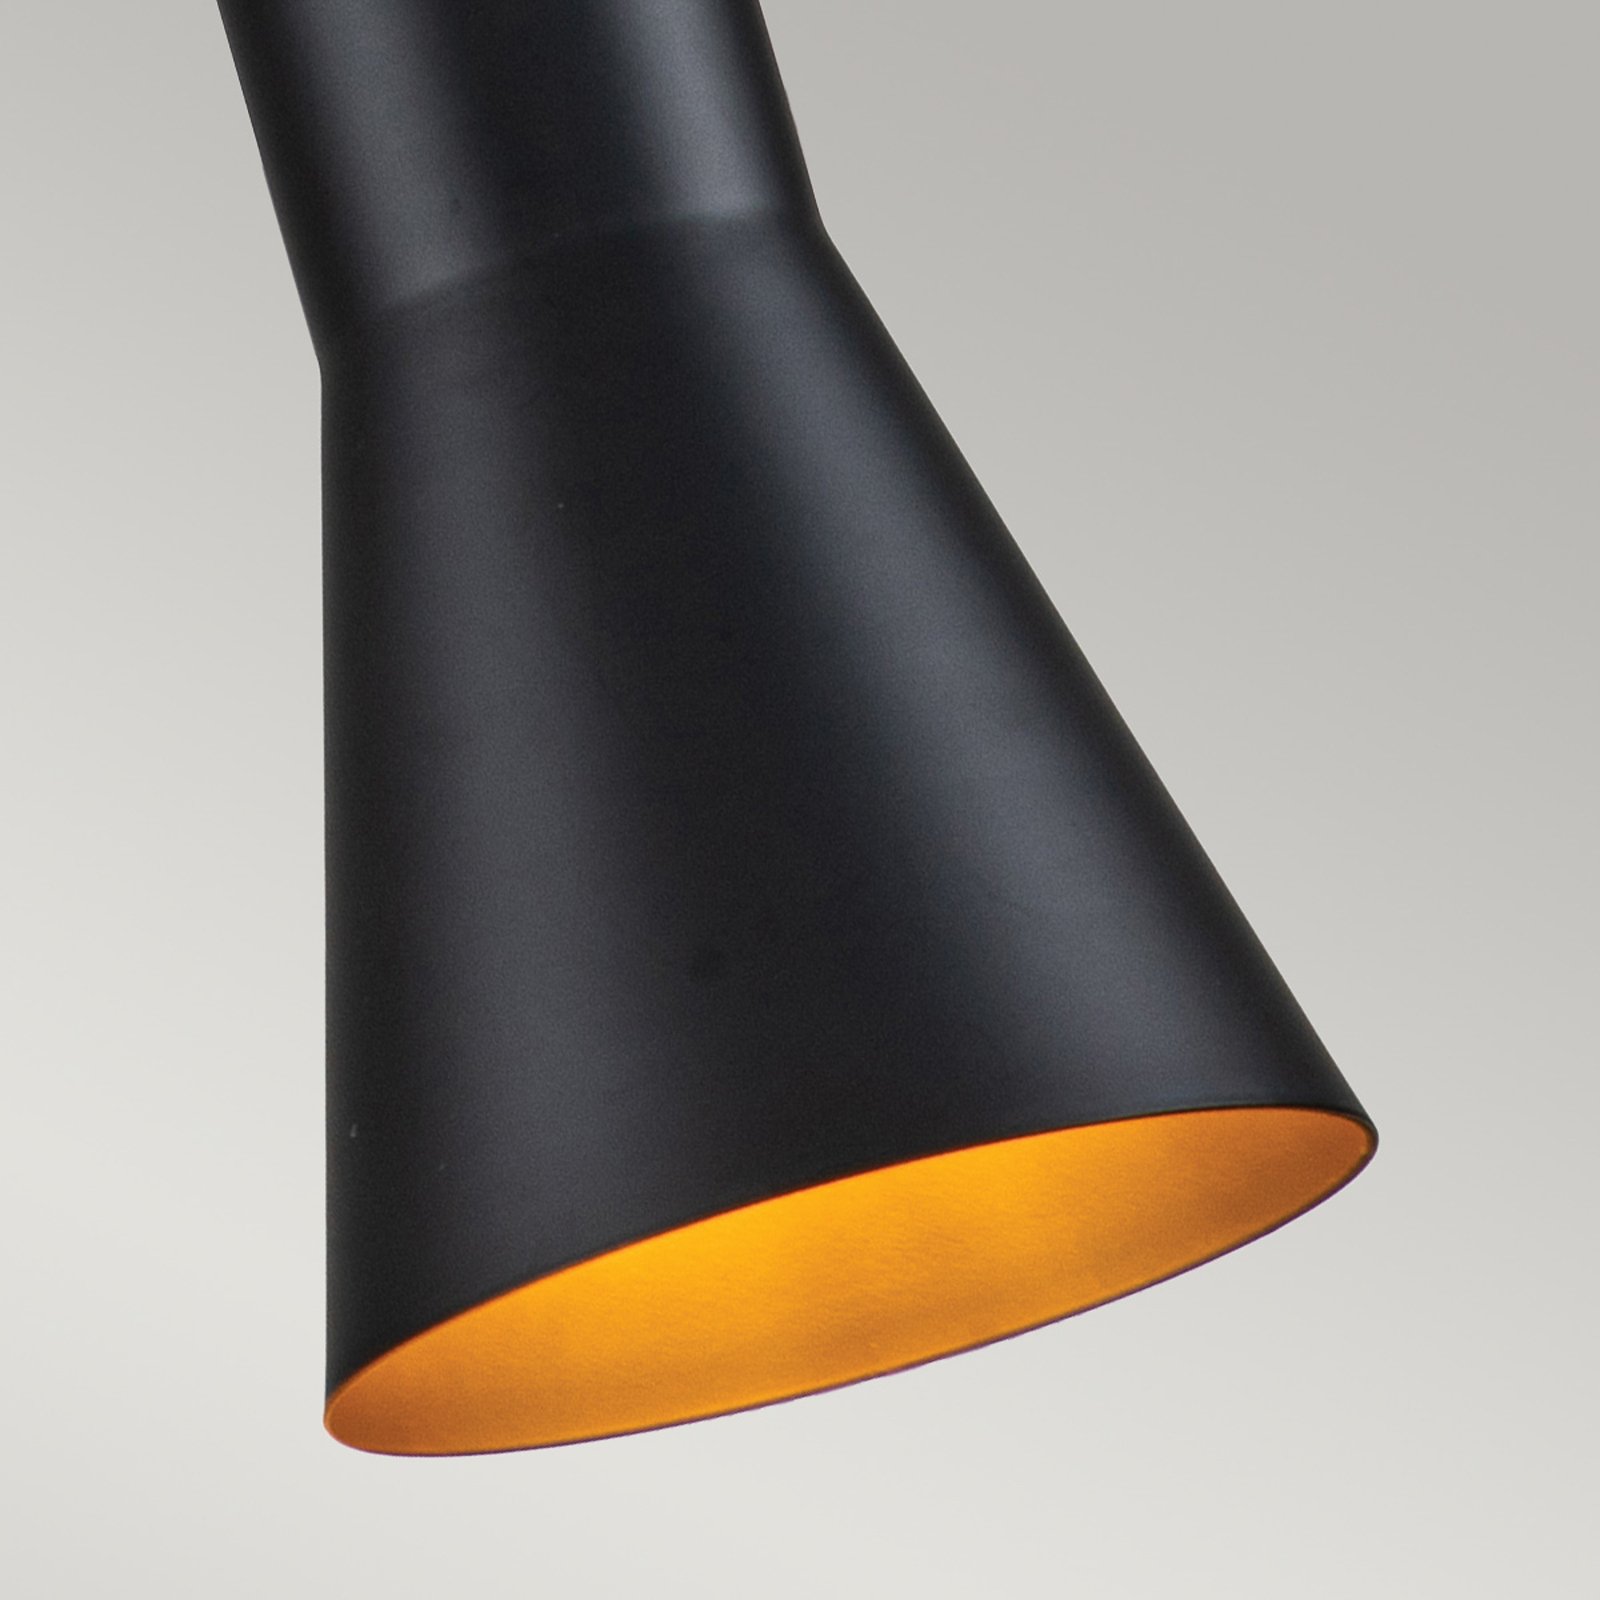 Hanglamp Etoile 1-lamp Ø 13,3 cm zwart mat